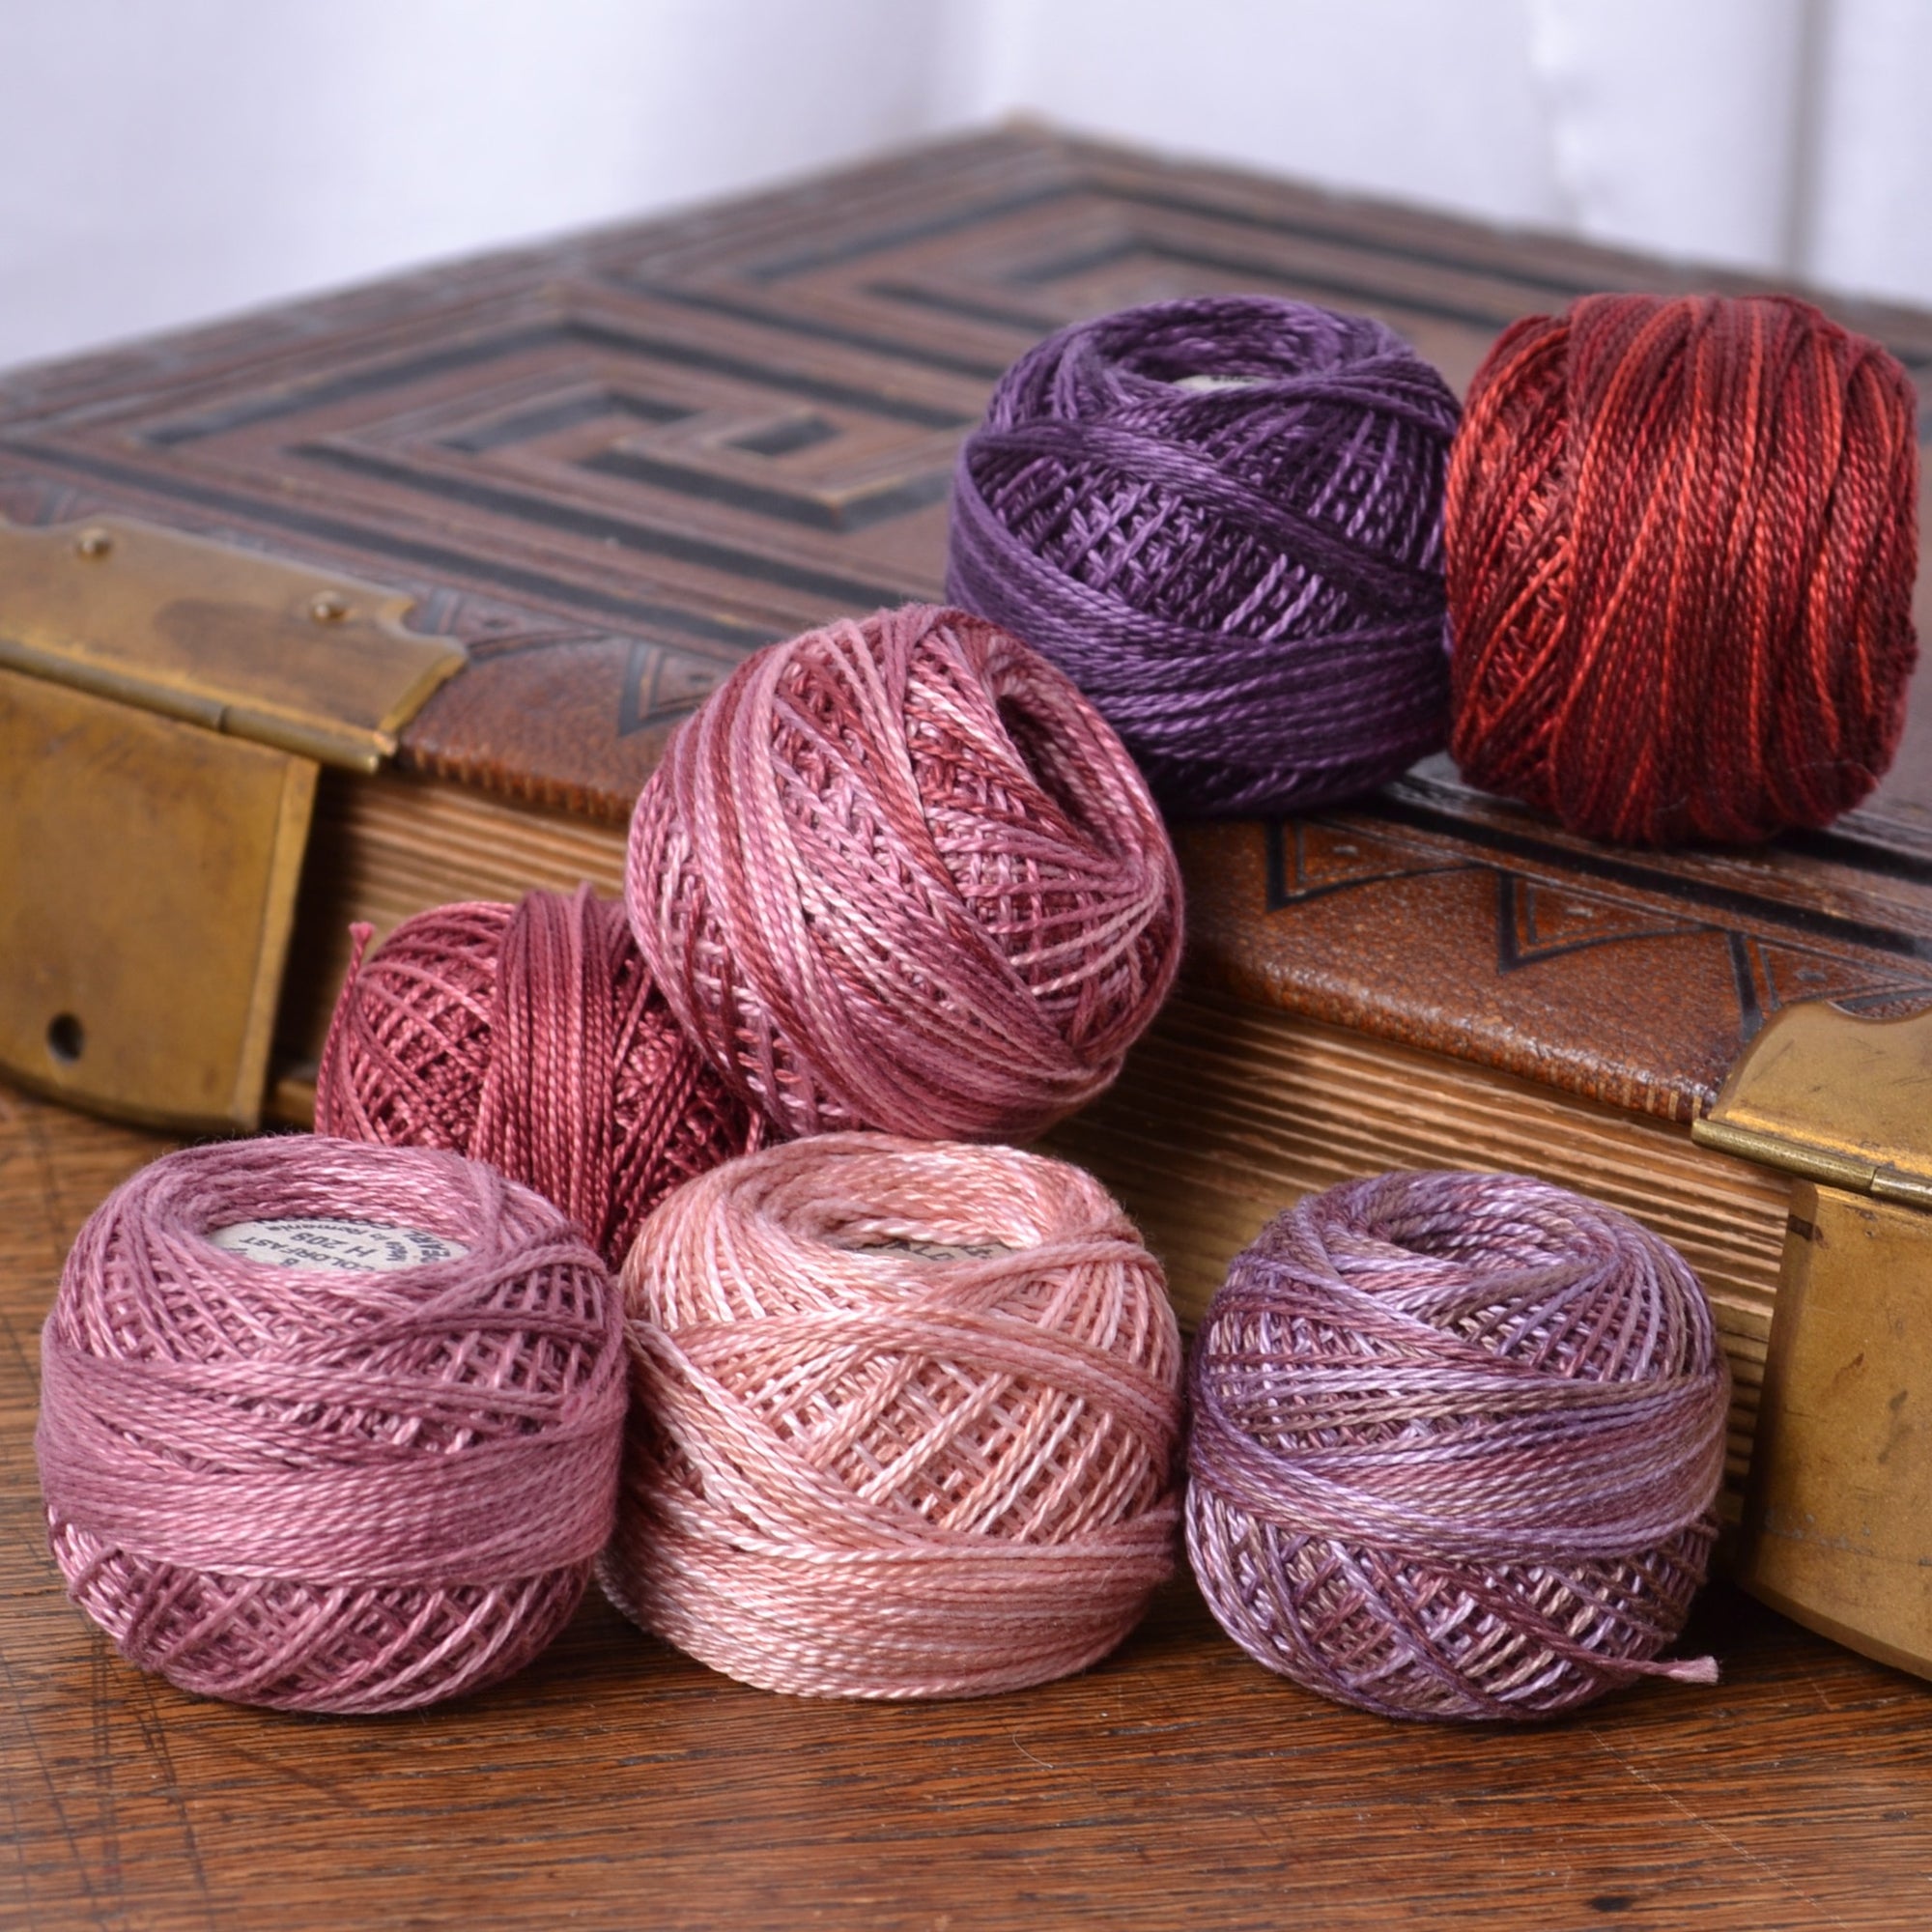 Beautiful Perle Cotton threads by Valdani